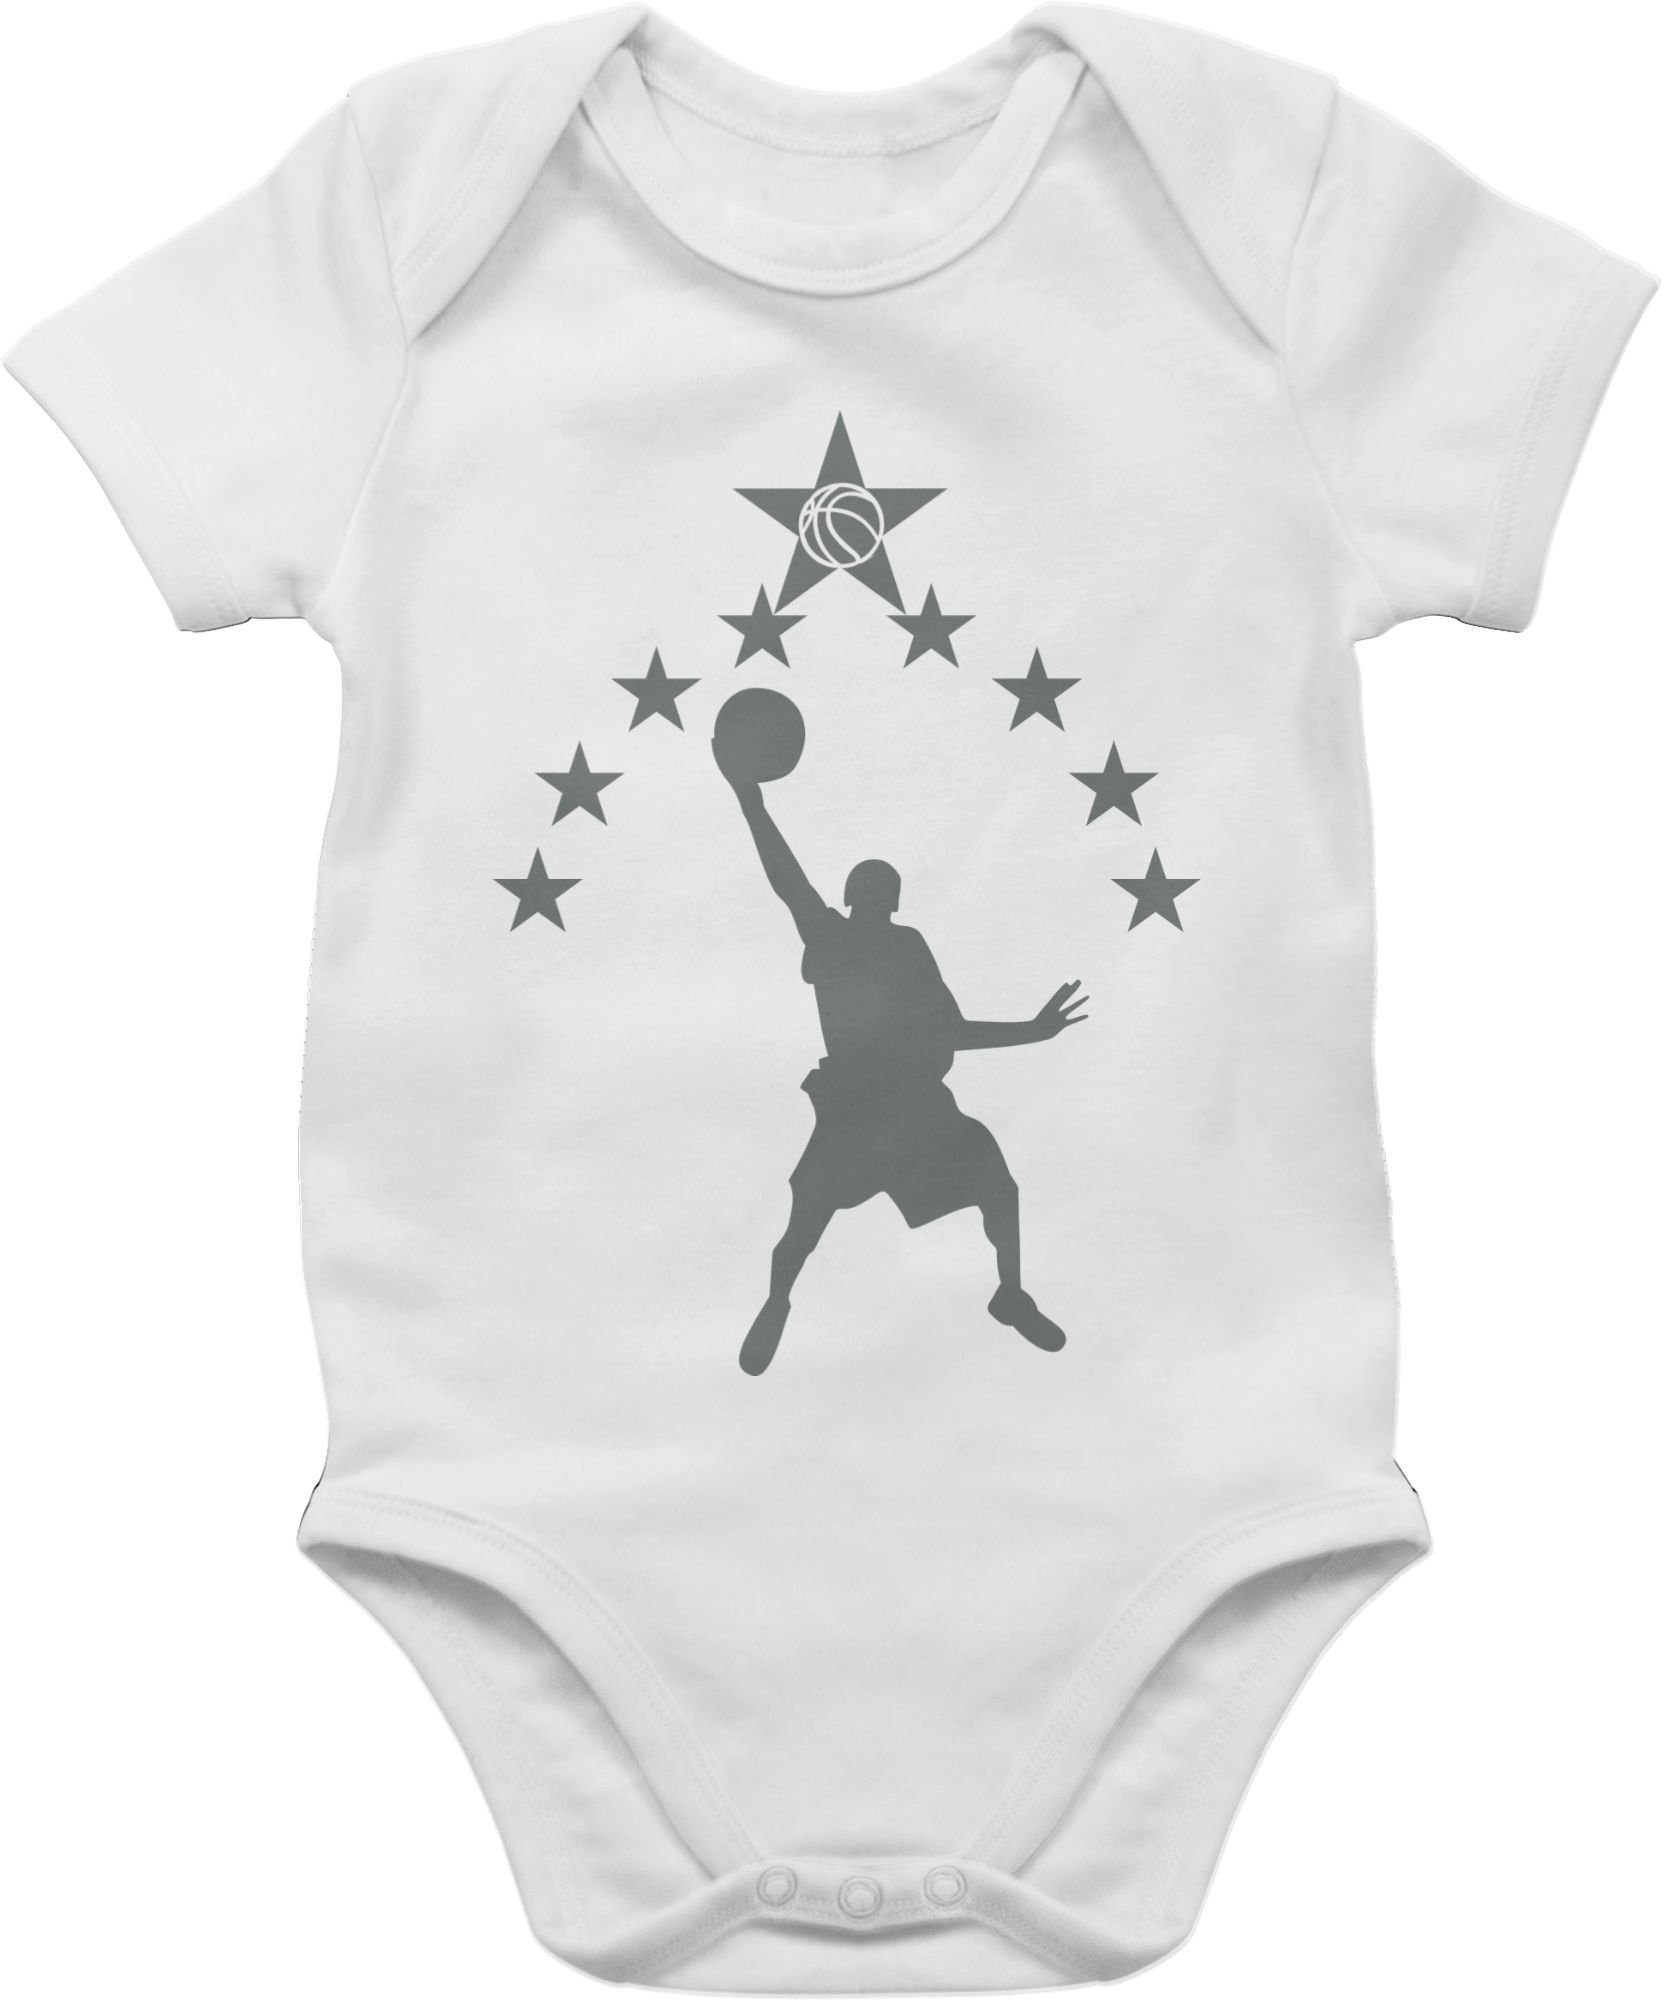 Kinder Mädchen (Gr. 50 - 92) Shirtracer Shirtbody Basketball Sterne - Sport & Bewegung Baby - Baby Body Kurzarm Kleidung Strampl